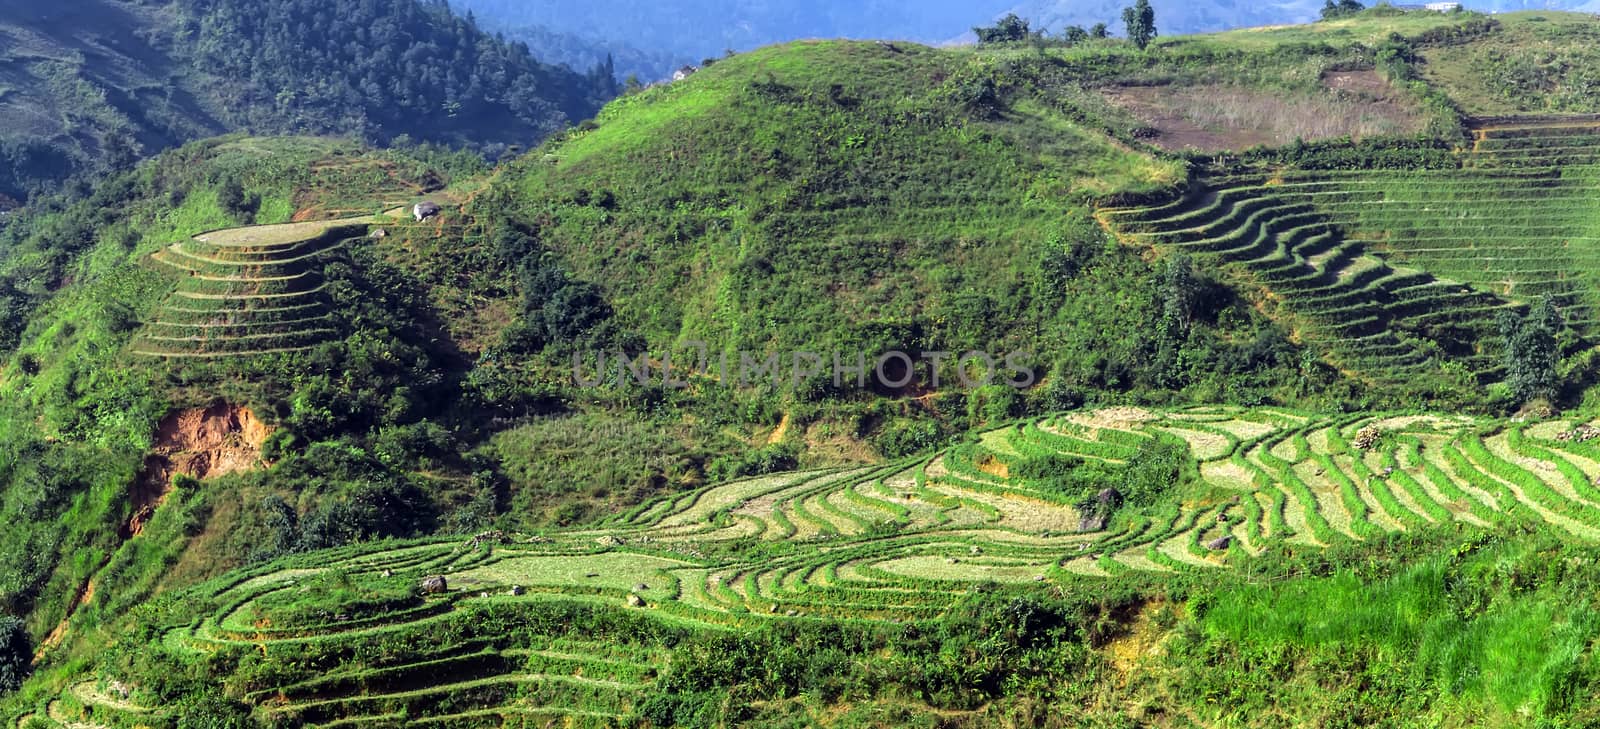 Rice fields on terraced Vietnam landscapes Mountain Pass, Sapa